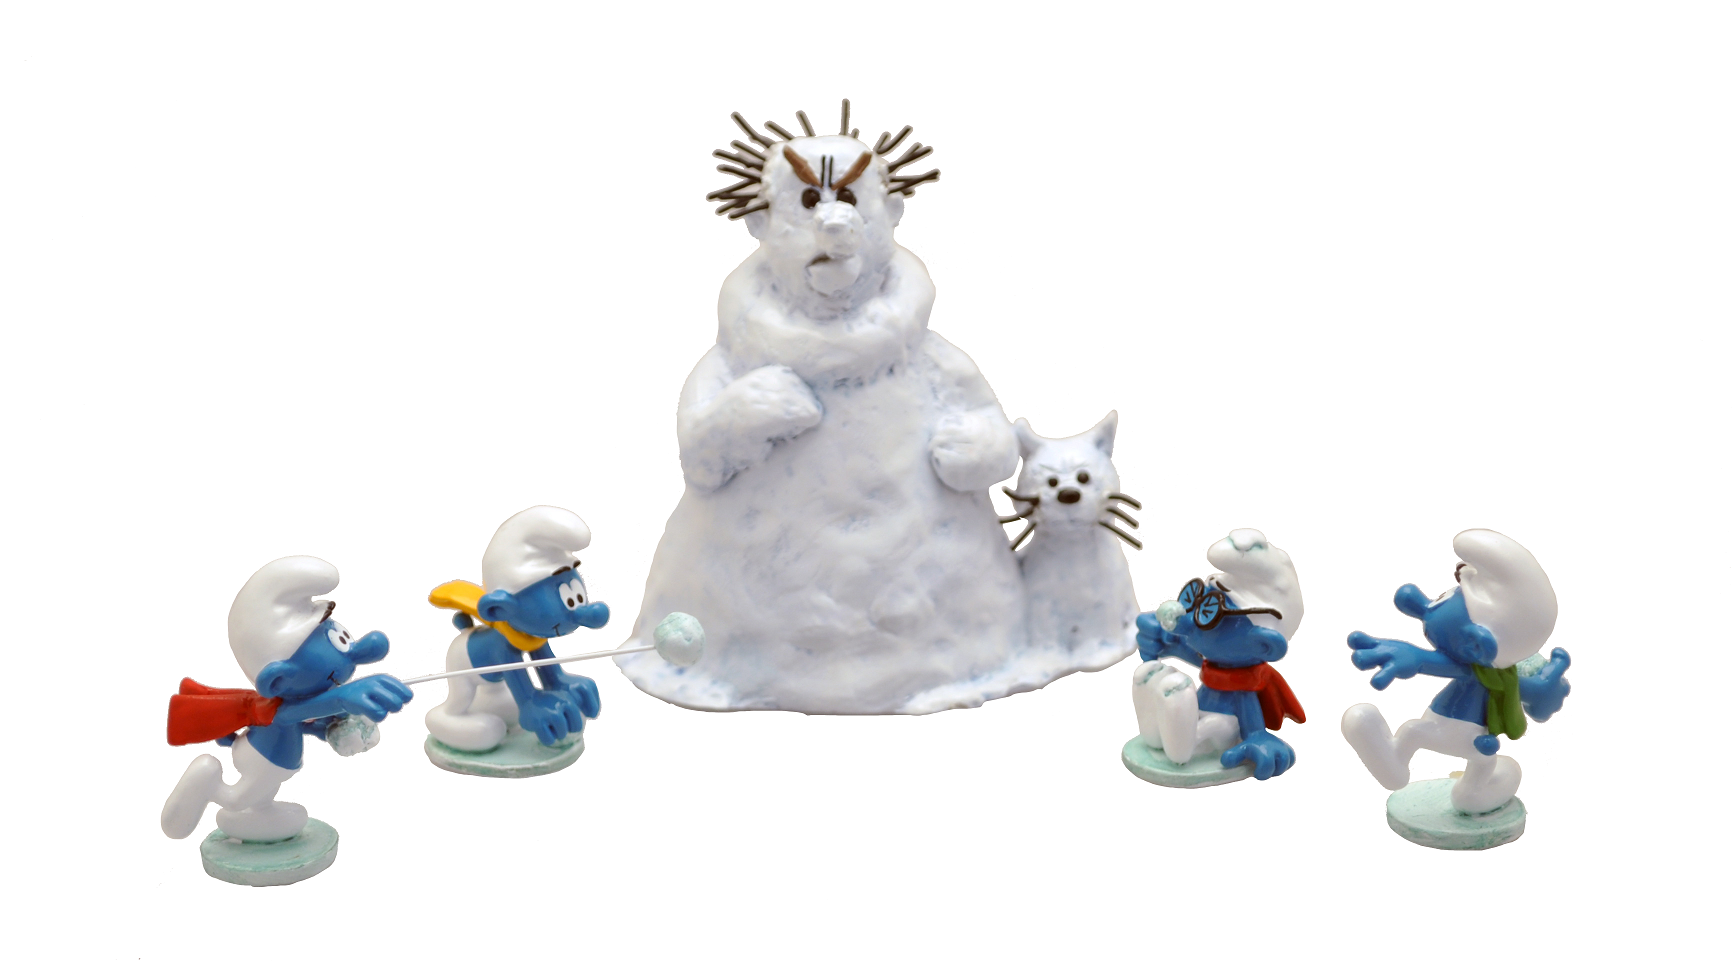 Sneeuwballen gevecht Smurfen (Atomax)